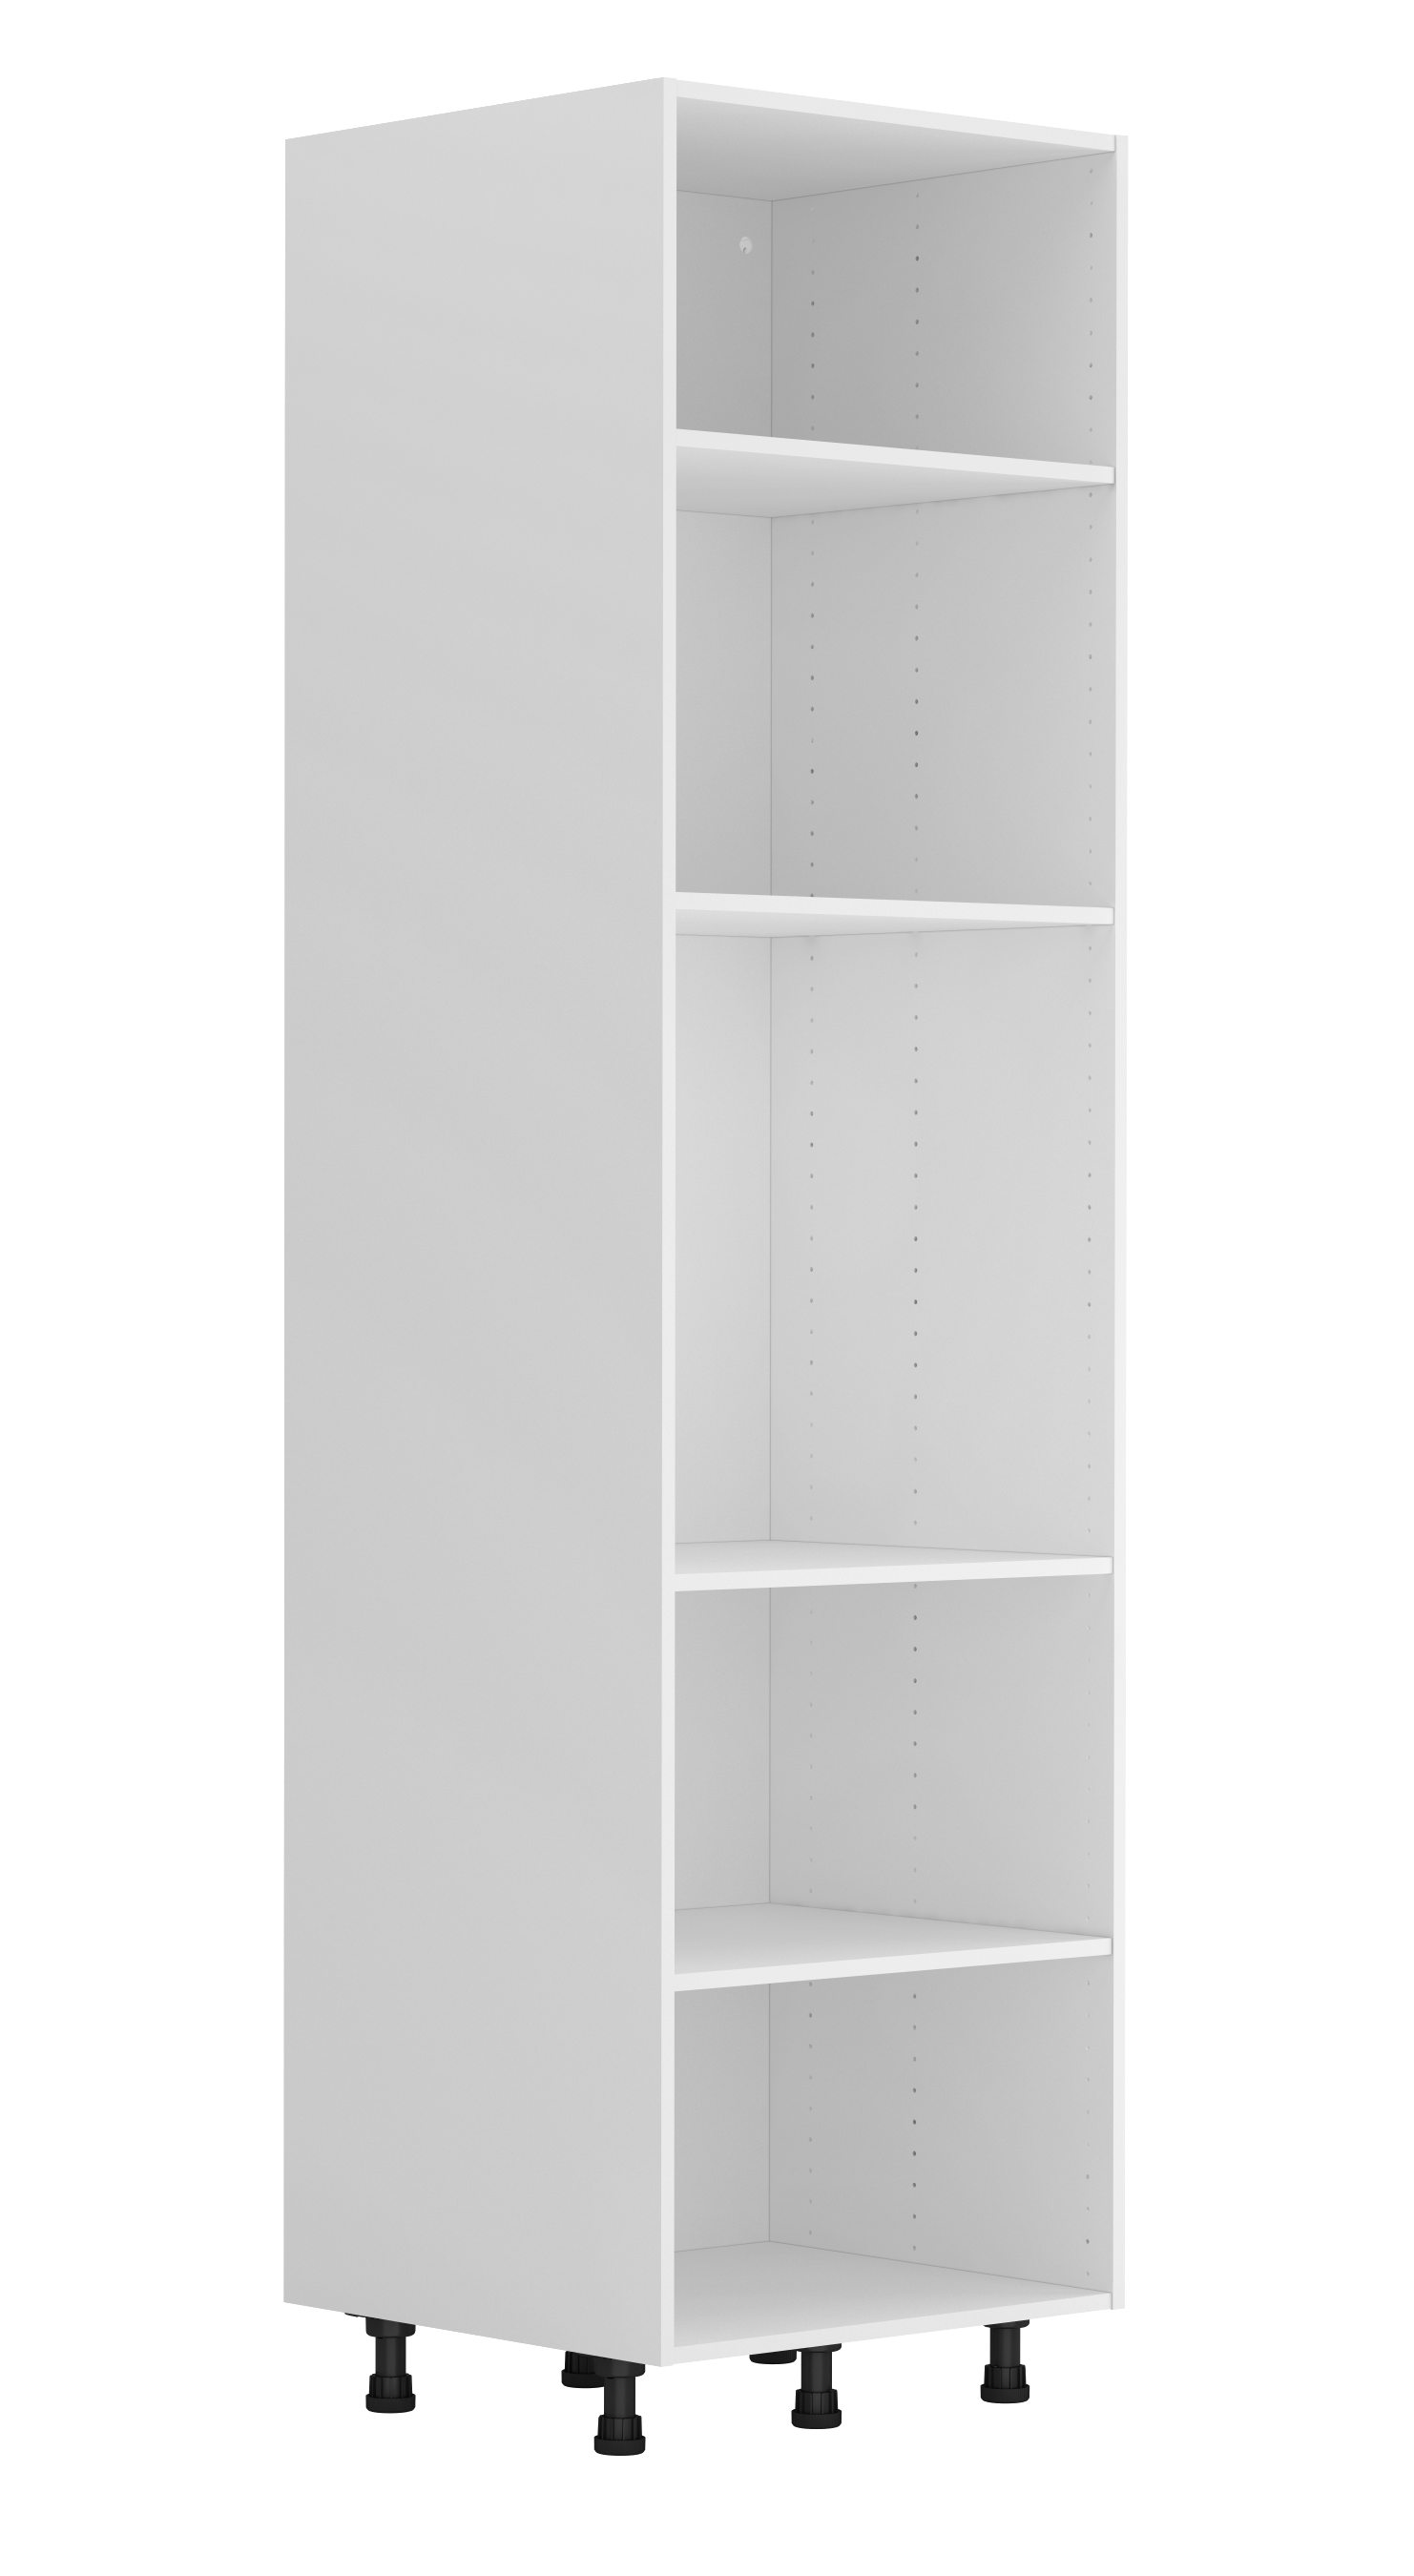 Mueble columna blanco delinia id 60x214 cm